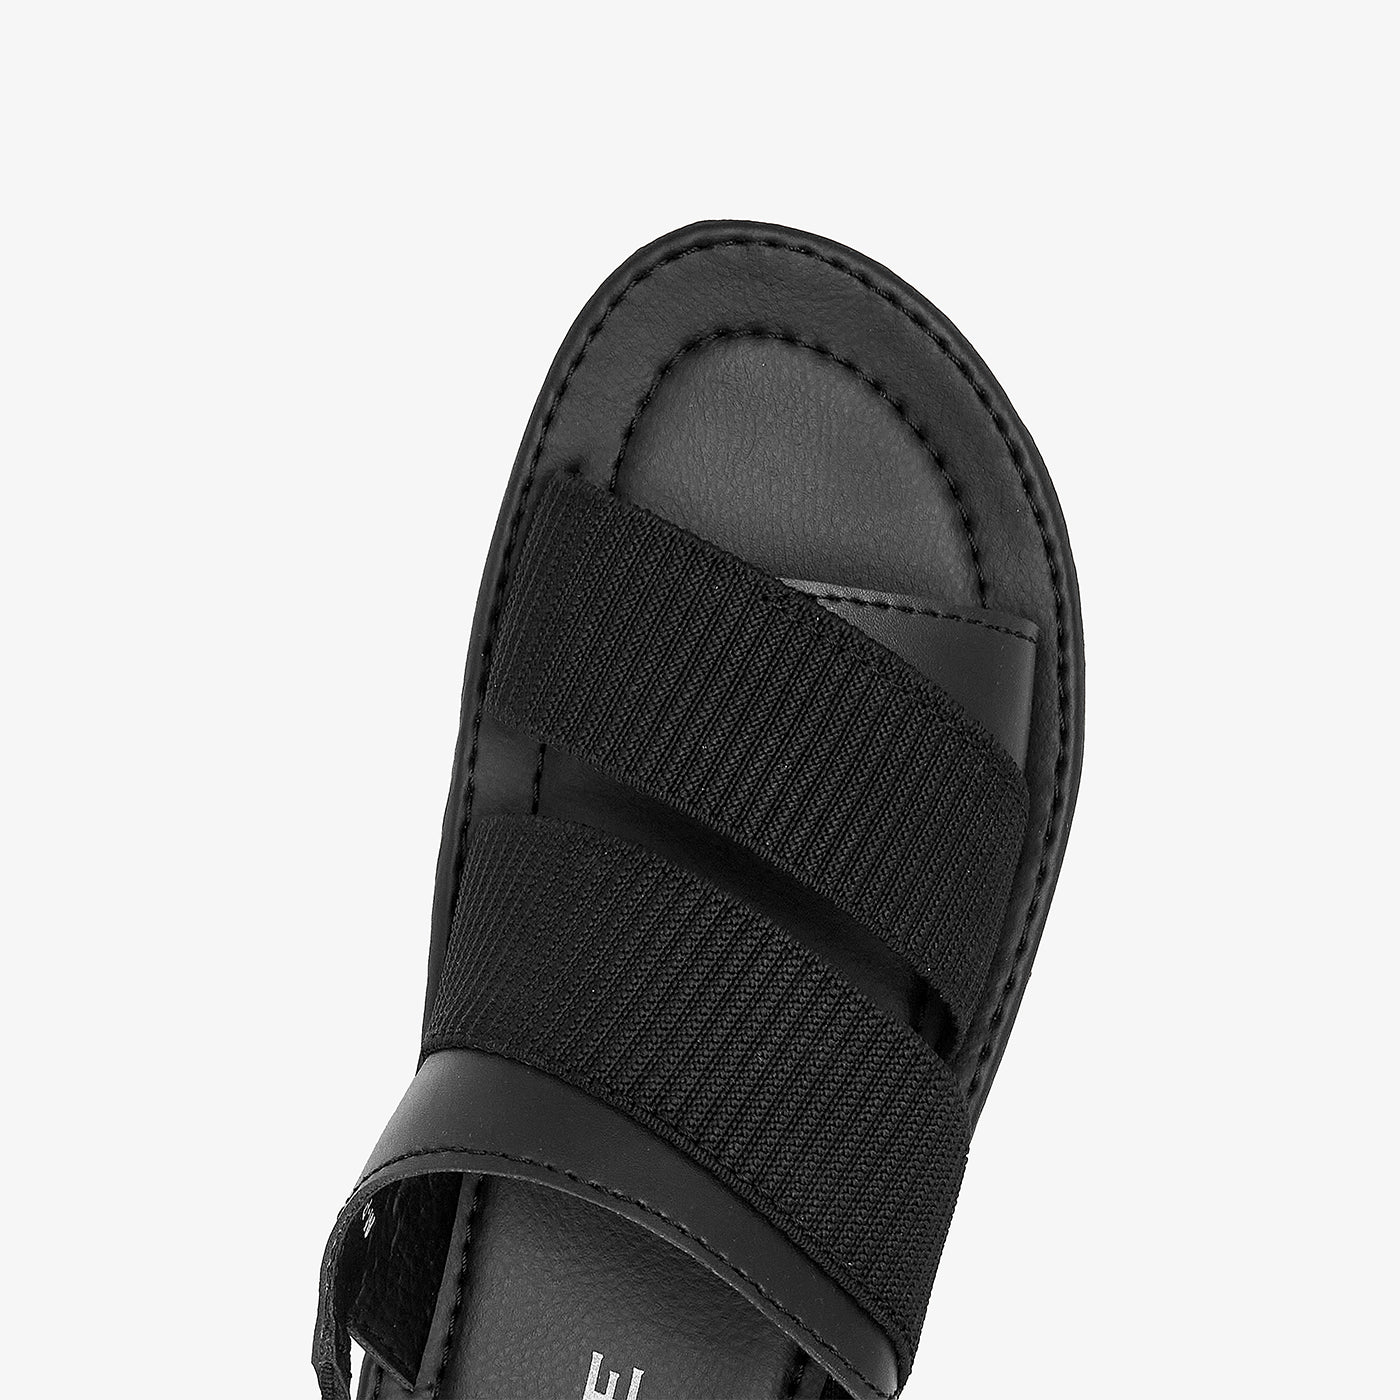 Men's Edgy Summer Sandals